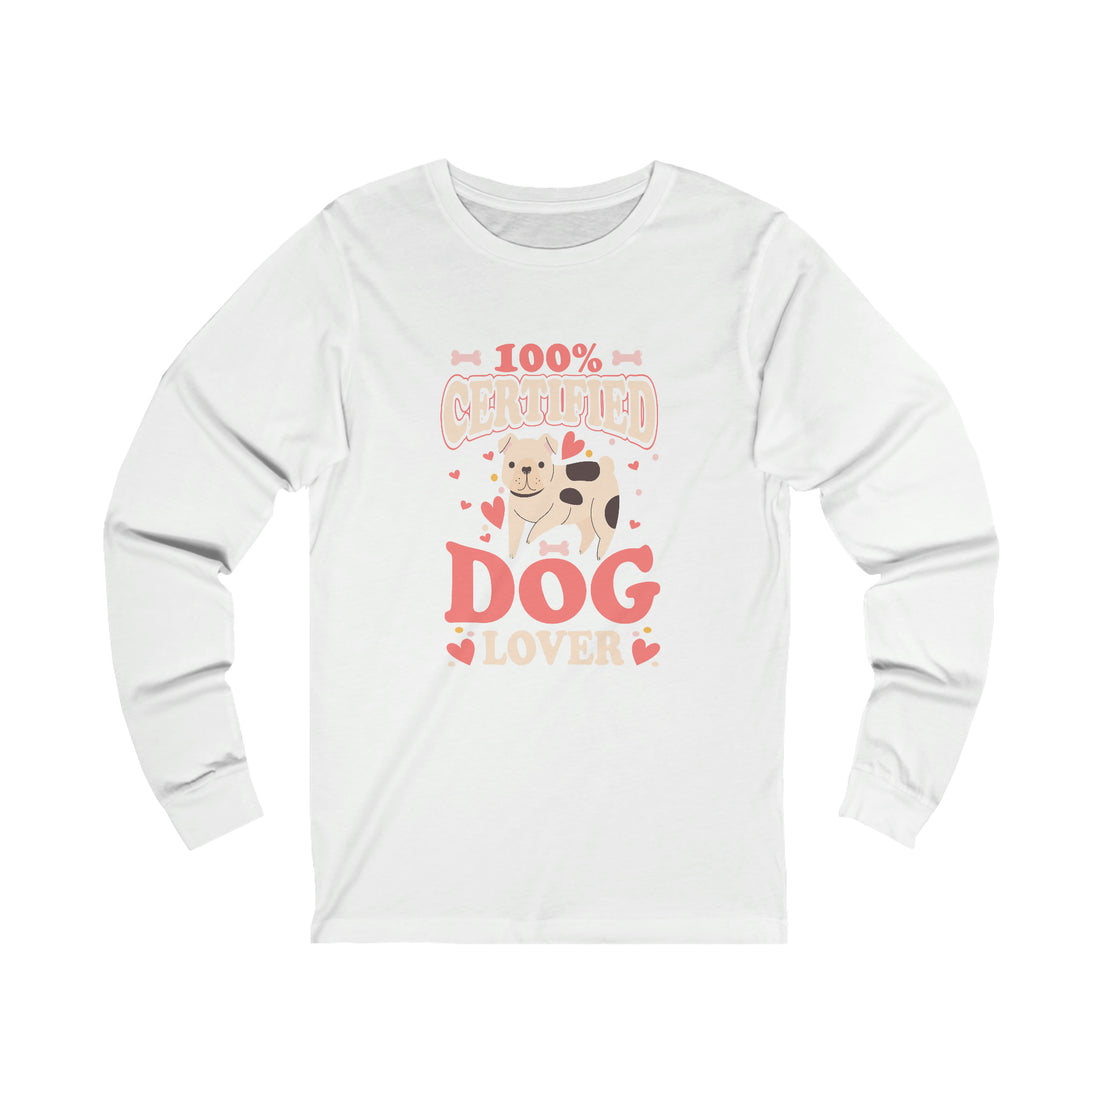 100% Certified Dog Lover - Unisex Jersey Long Sleeve Tee